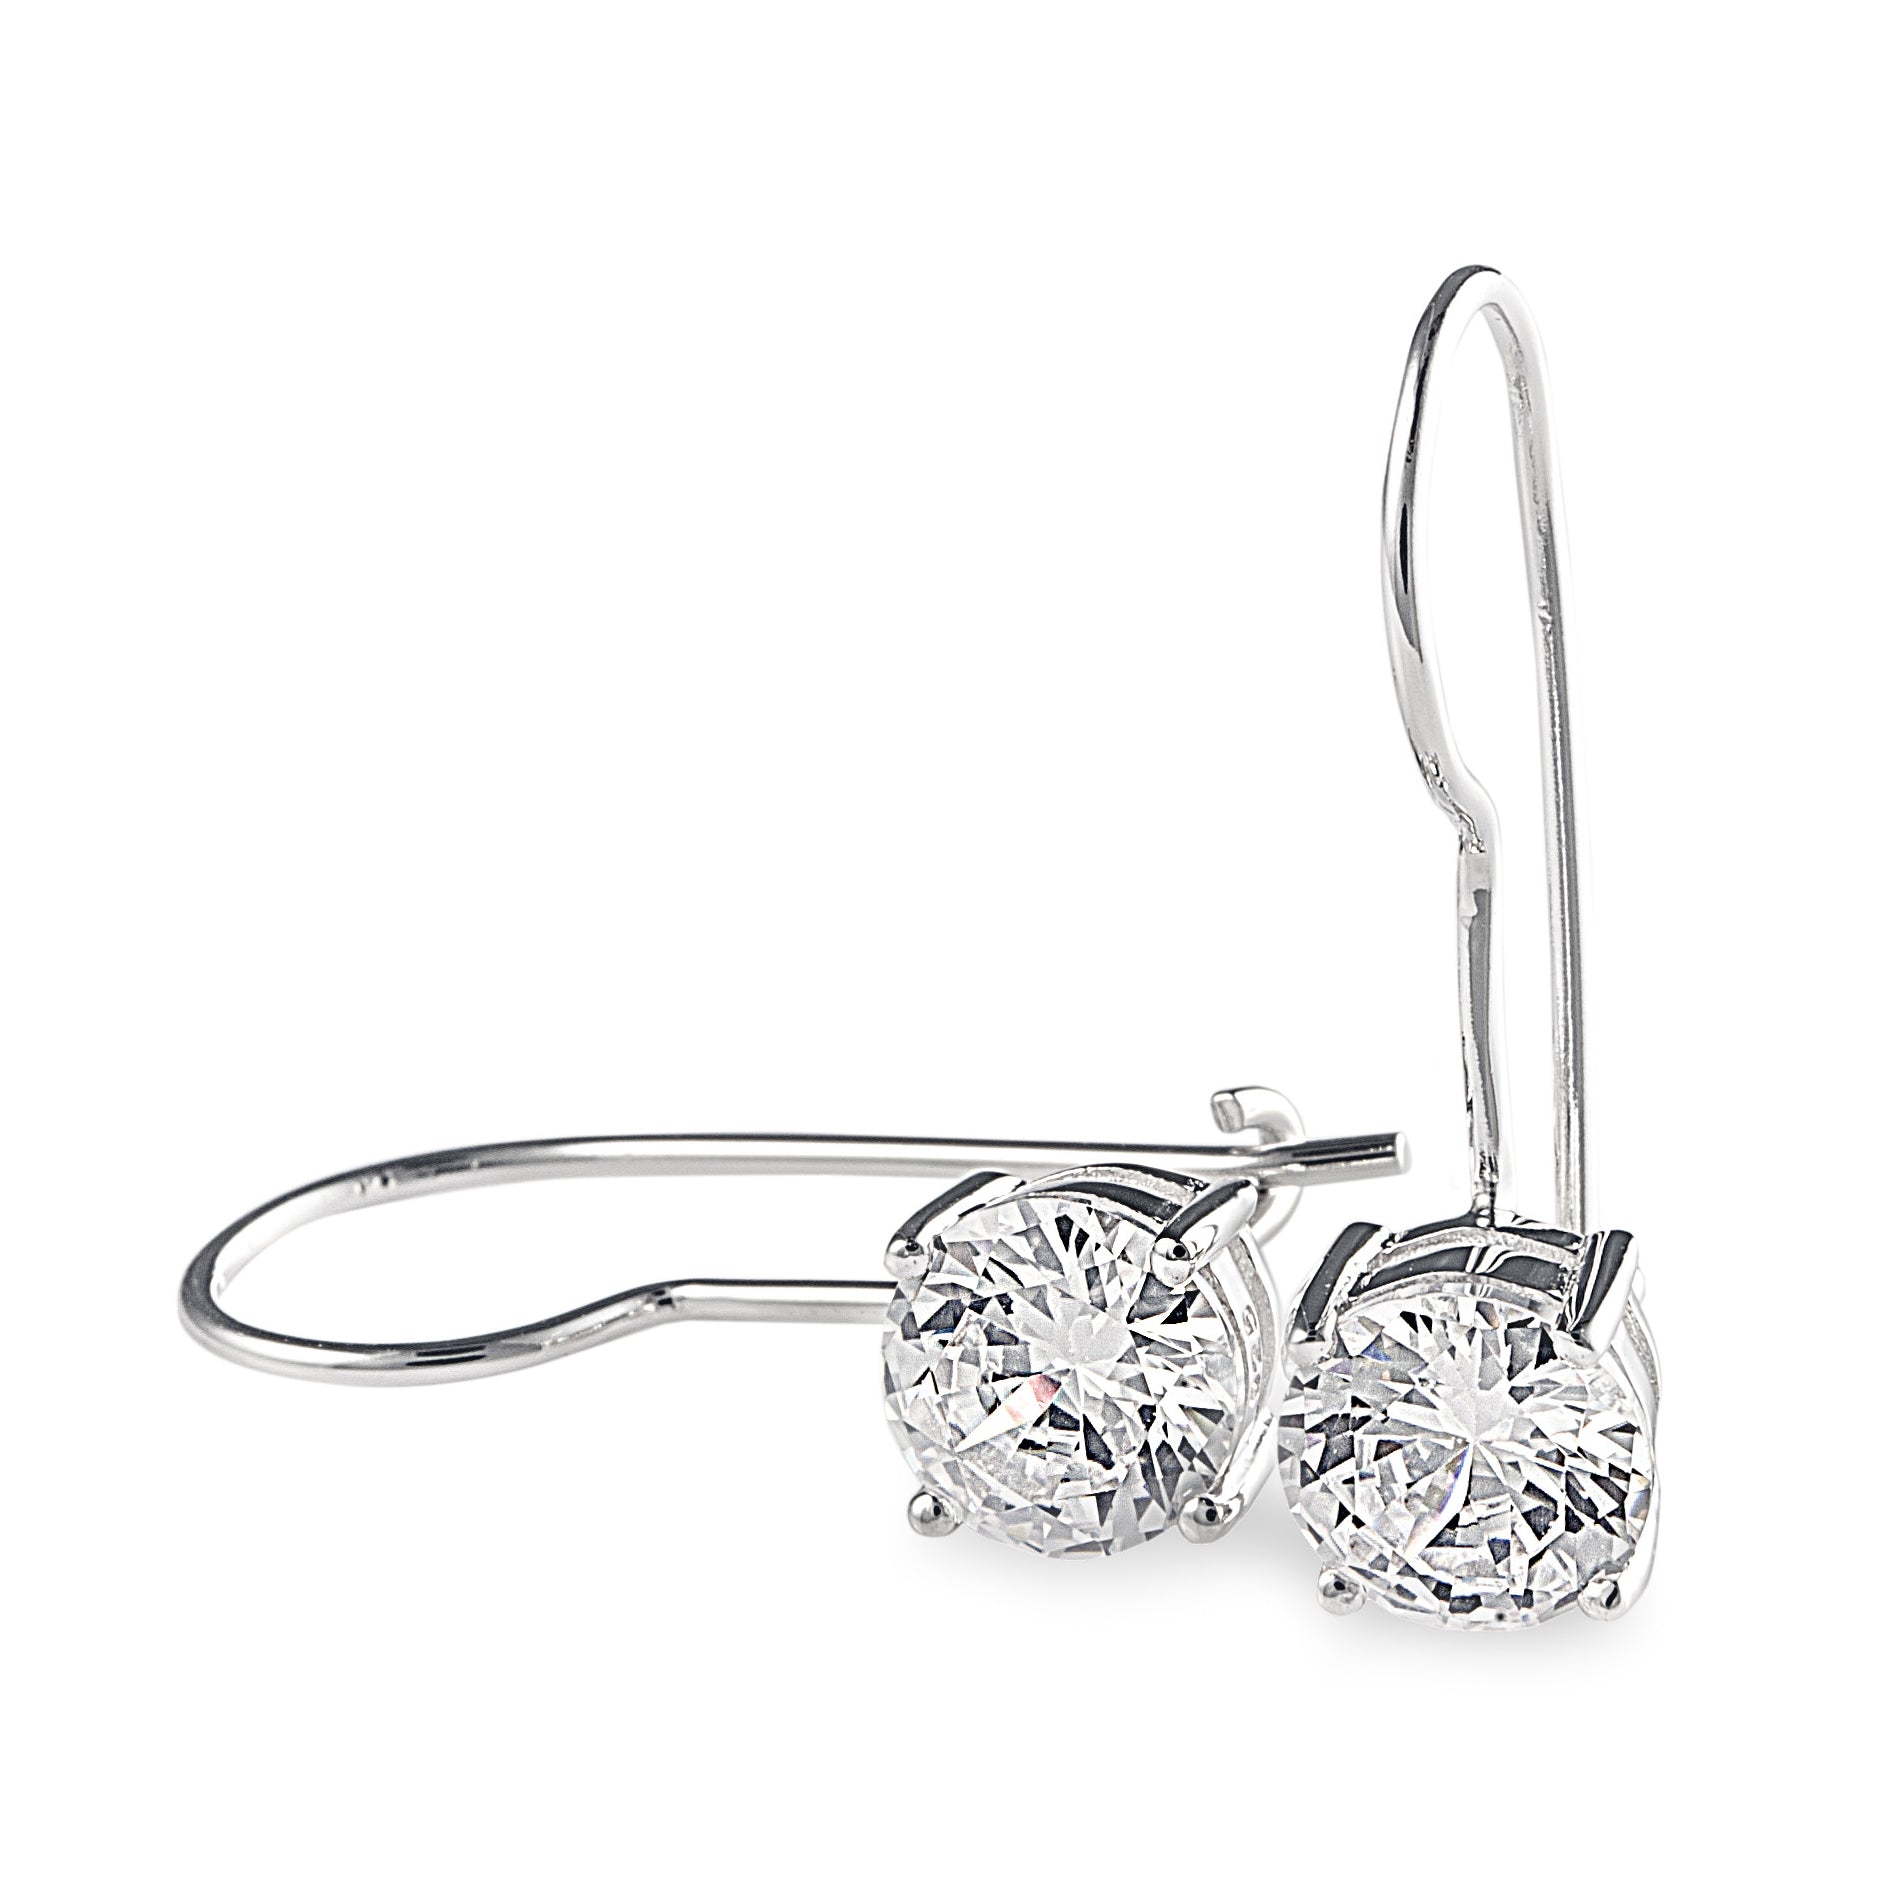 Drop Earrings: Glamour Drop Rocks - in 925 Sterling Silver with 3 Carat Cubic Zirconia Stones. Worldwide shipping. Luxury jewellery by Bellagio & Co.